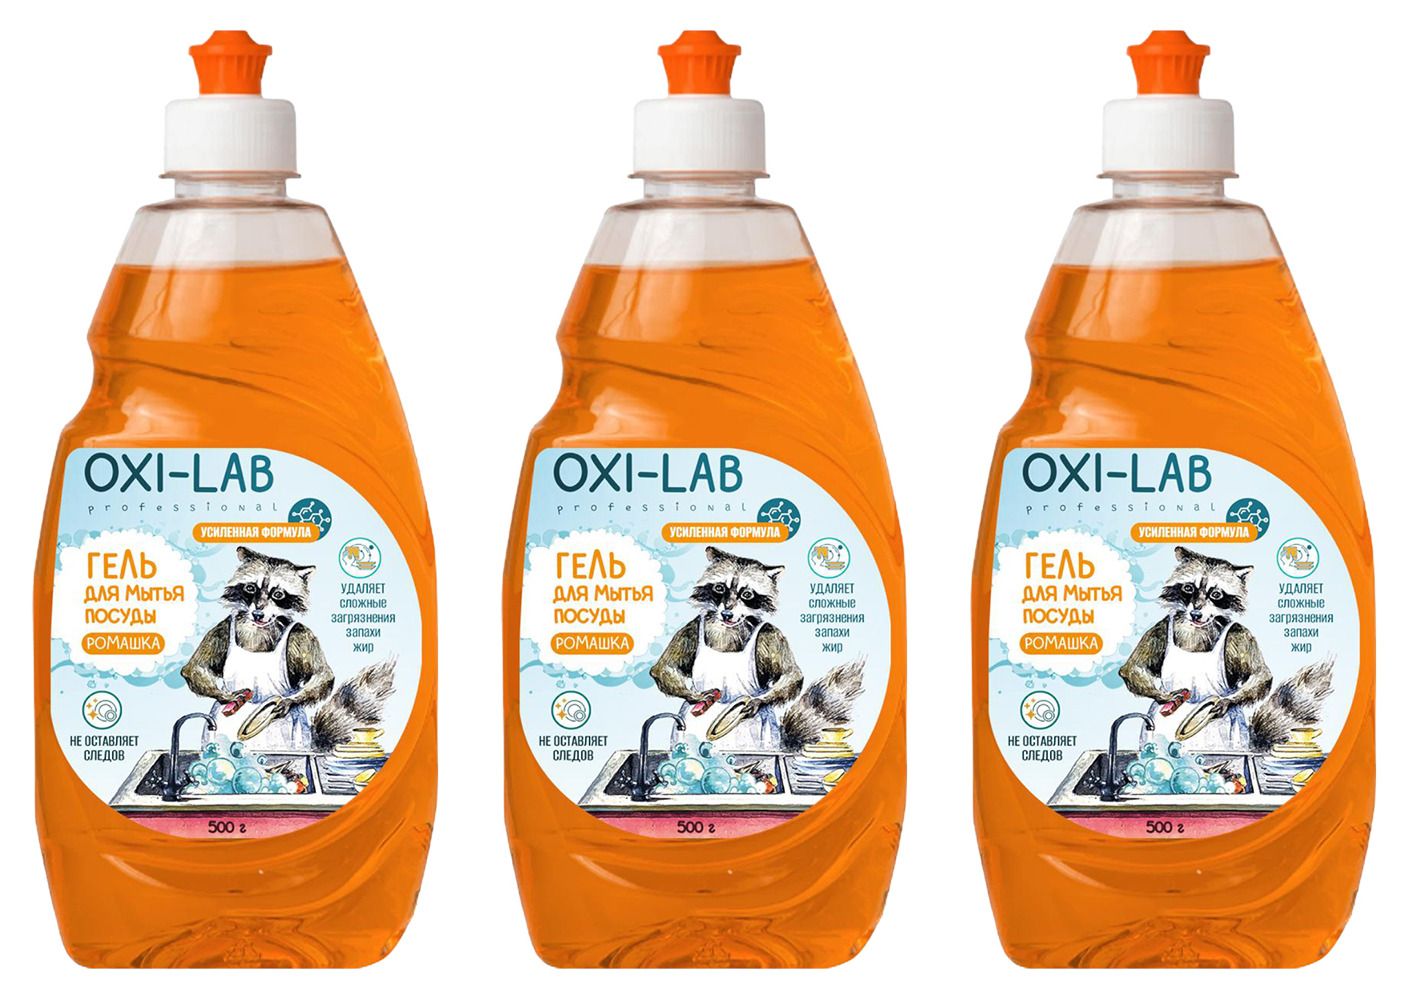 Oxi Lab professional гель для мытья. Oxi Lab. Lab гель для душа. Oxi Lab professional спрей для чистки сантехники состав. Gel laboratory